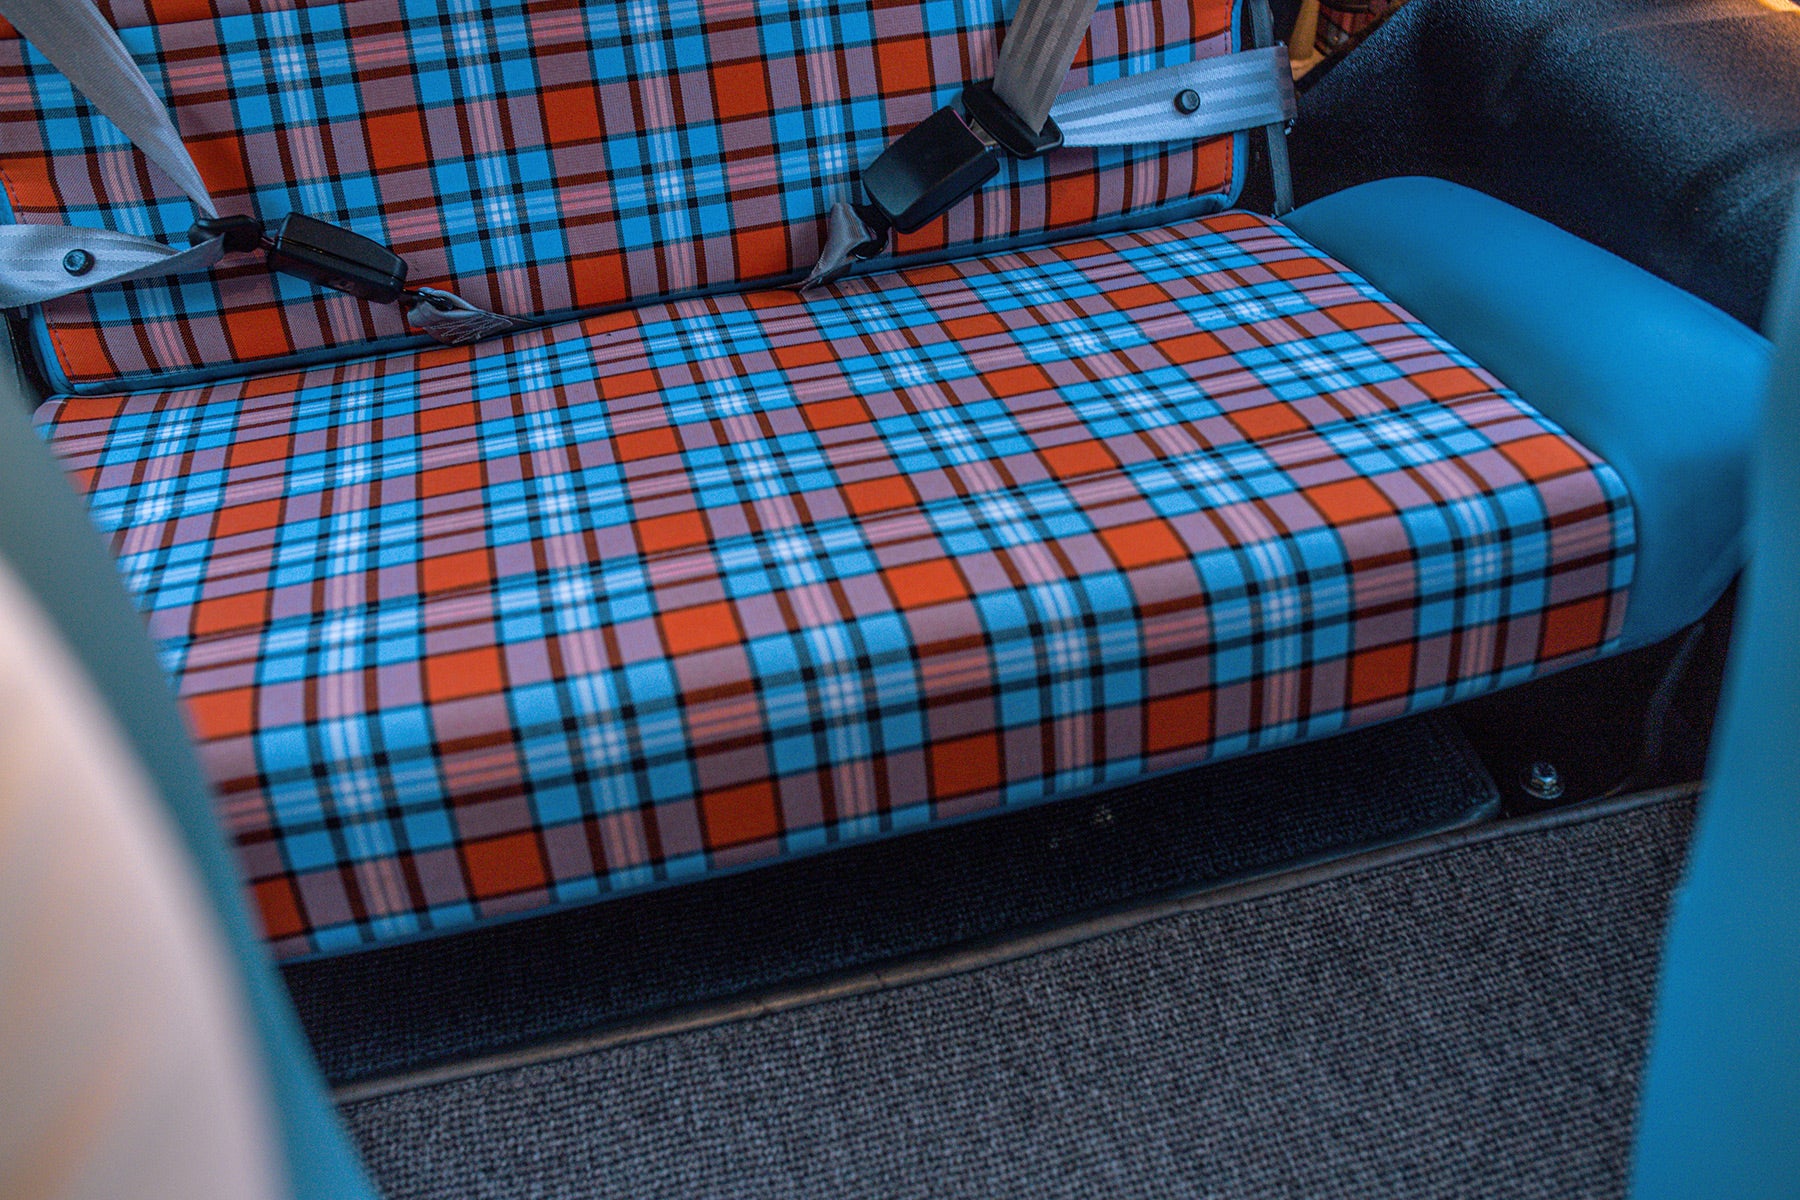 Spirit of le mans plaid tartan fabric cloth bronco interior rear bench seat detail